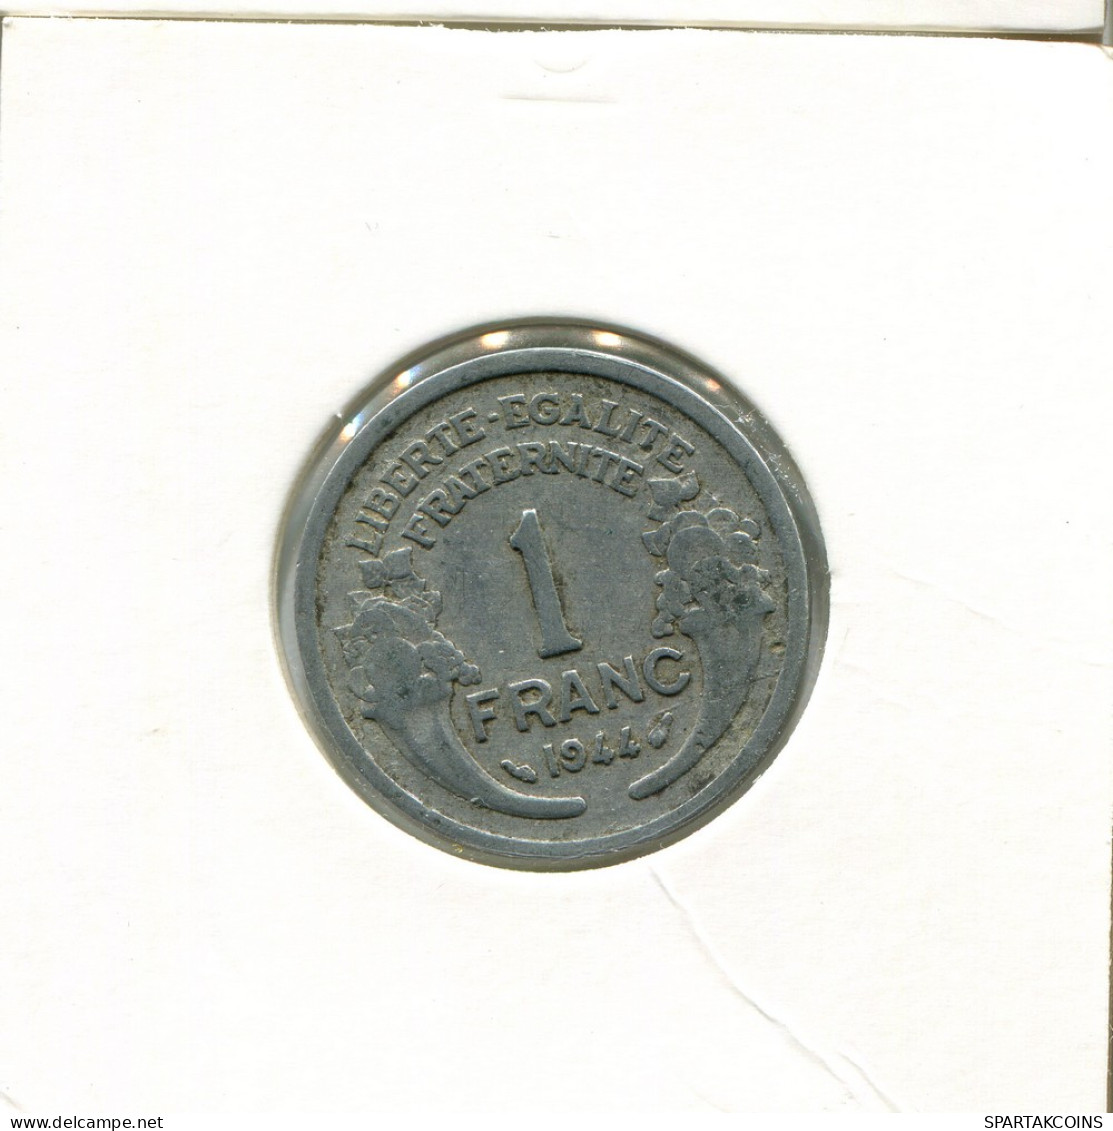 1 FRANC 1944 FRANCE Coin French Coin #AK590 - 1 Franc